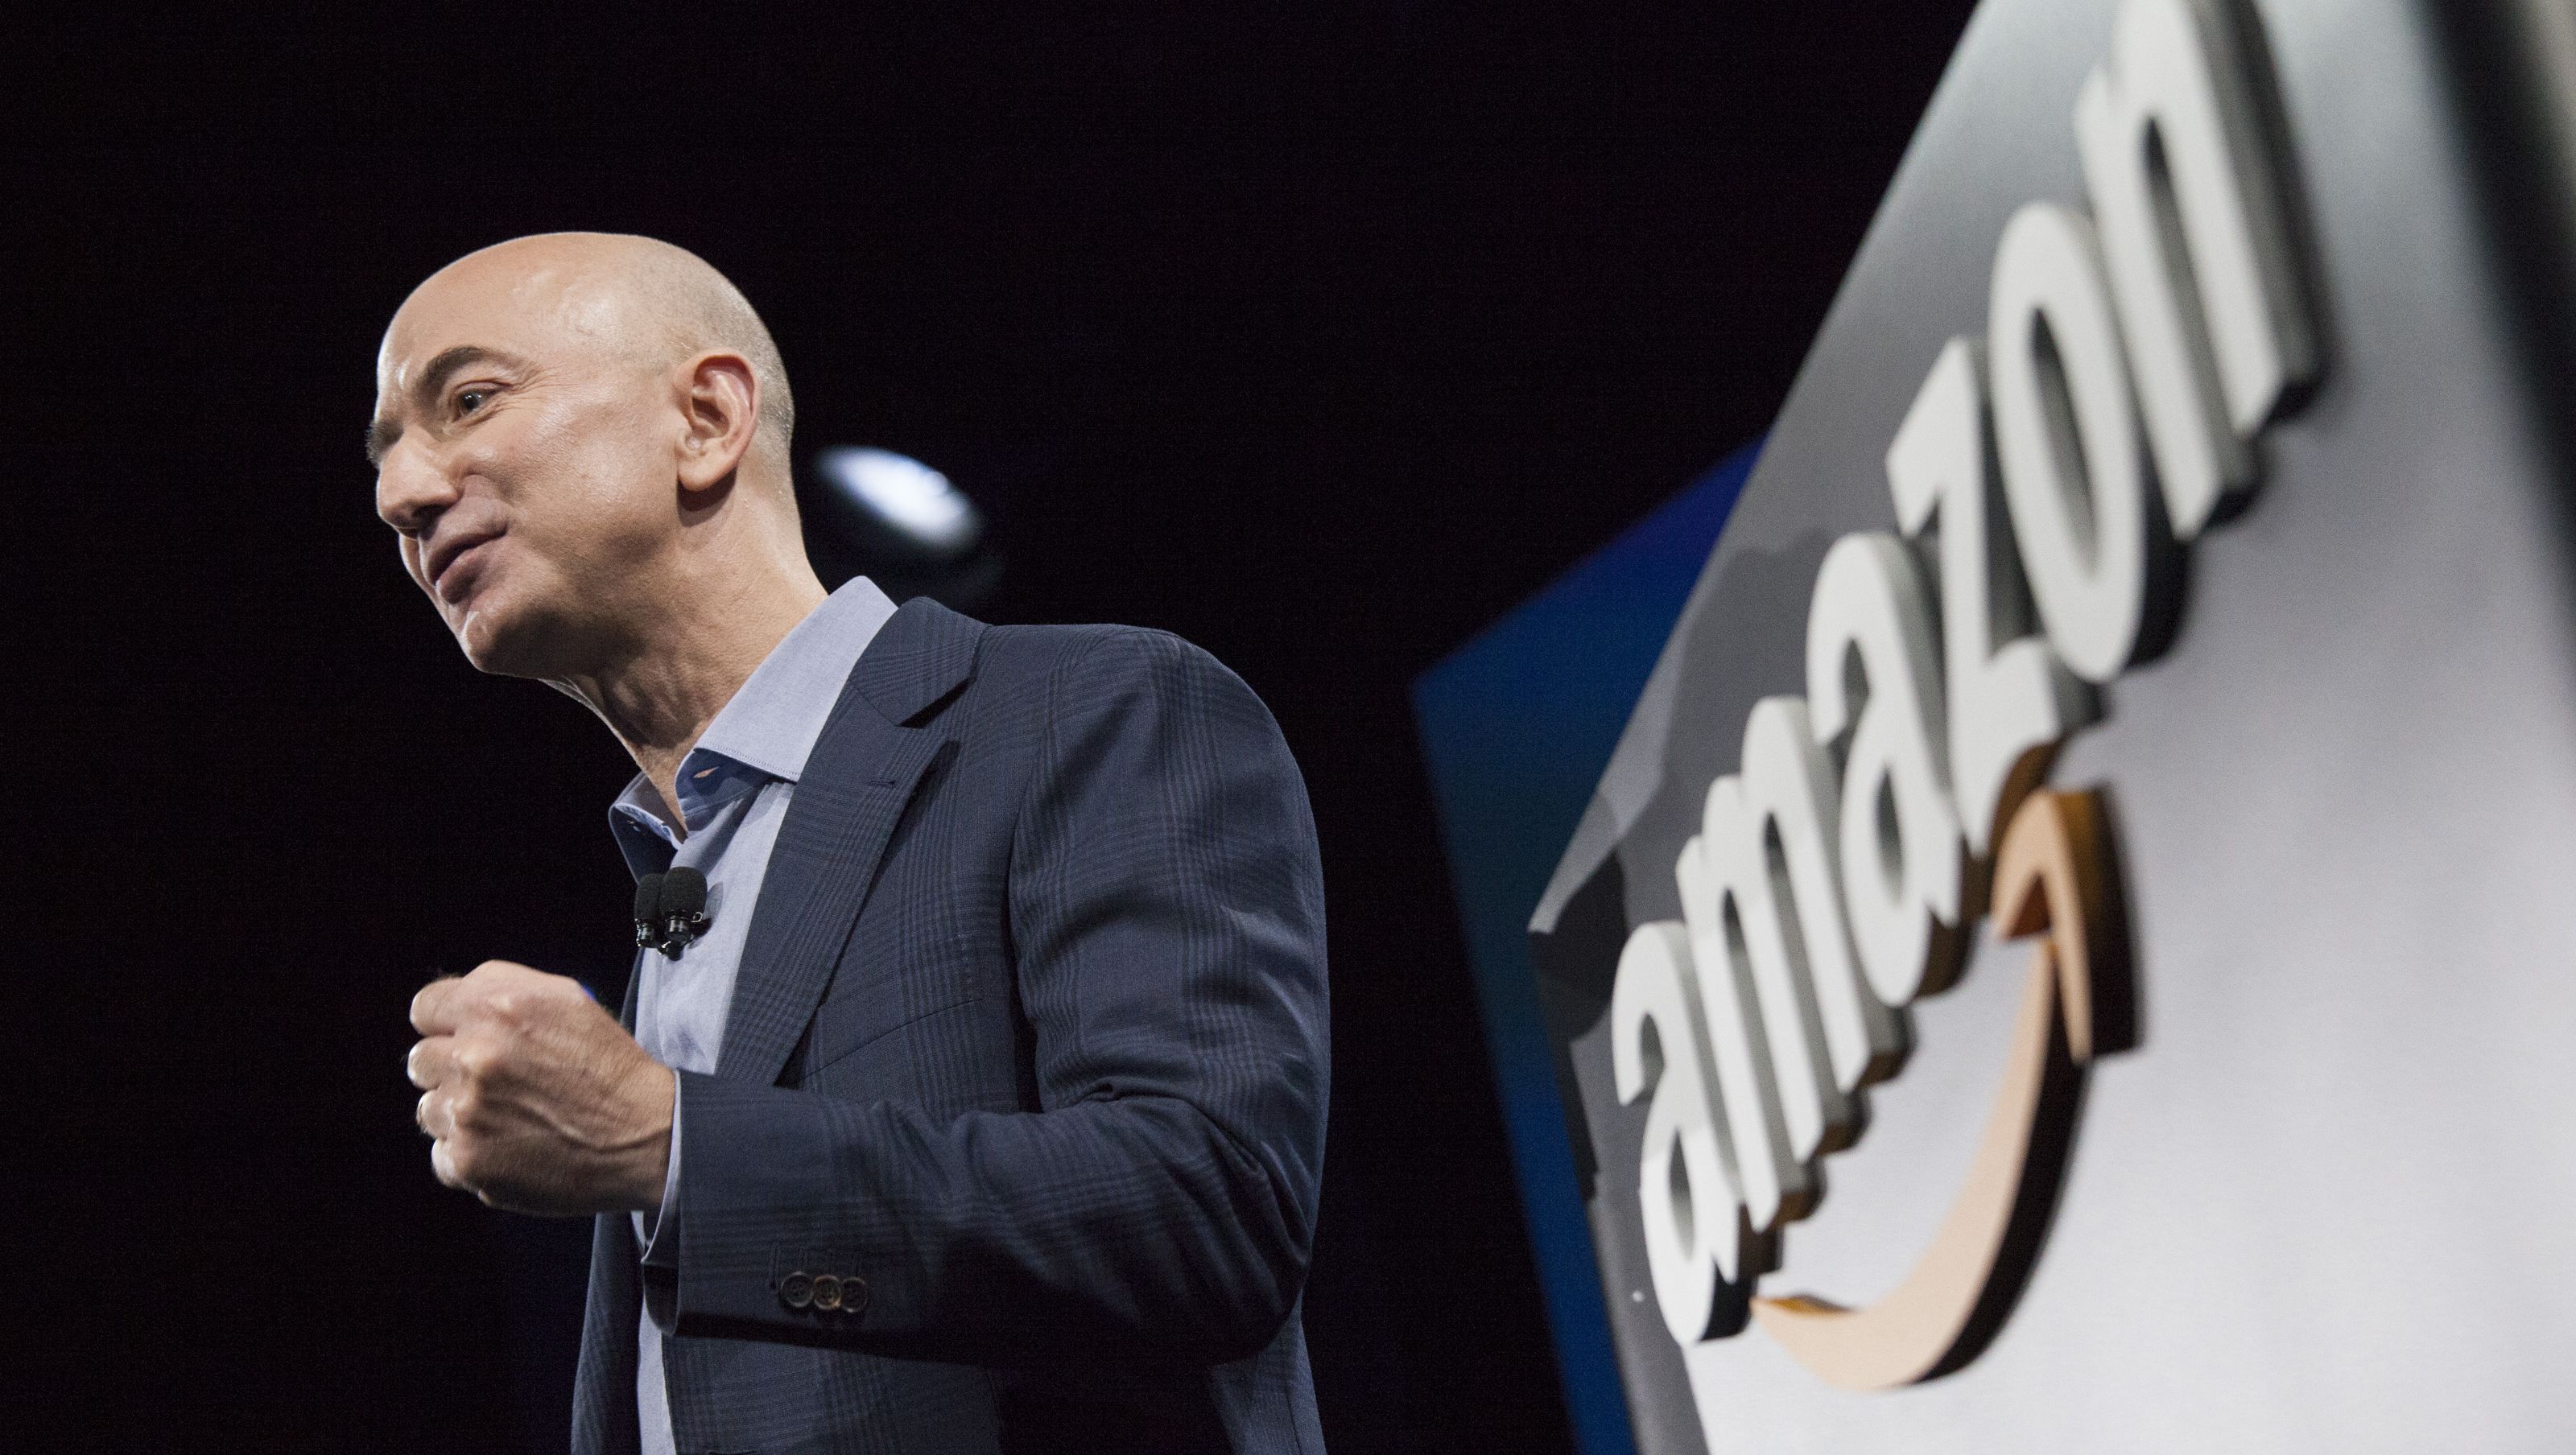 chief Jeff Bezos is no longer world's richest person